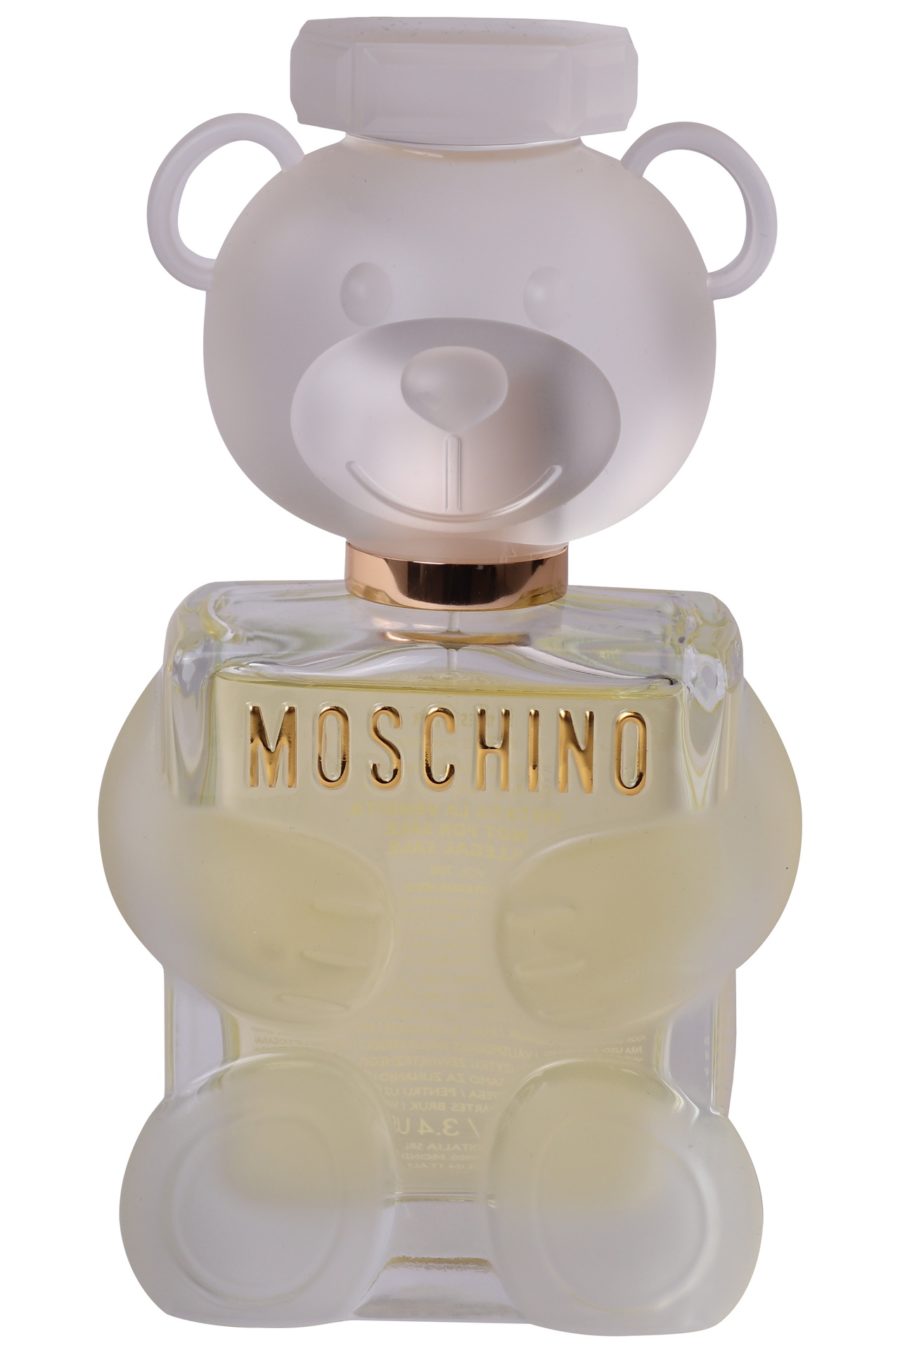 Perfume Moschino Toy 2 100 ml - 91447f5cd2759bbea764e065d9eb09aa21cf41a8